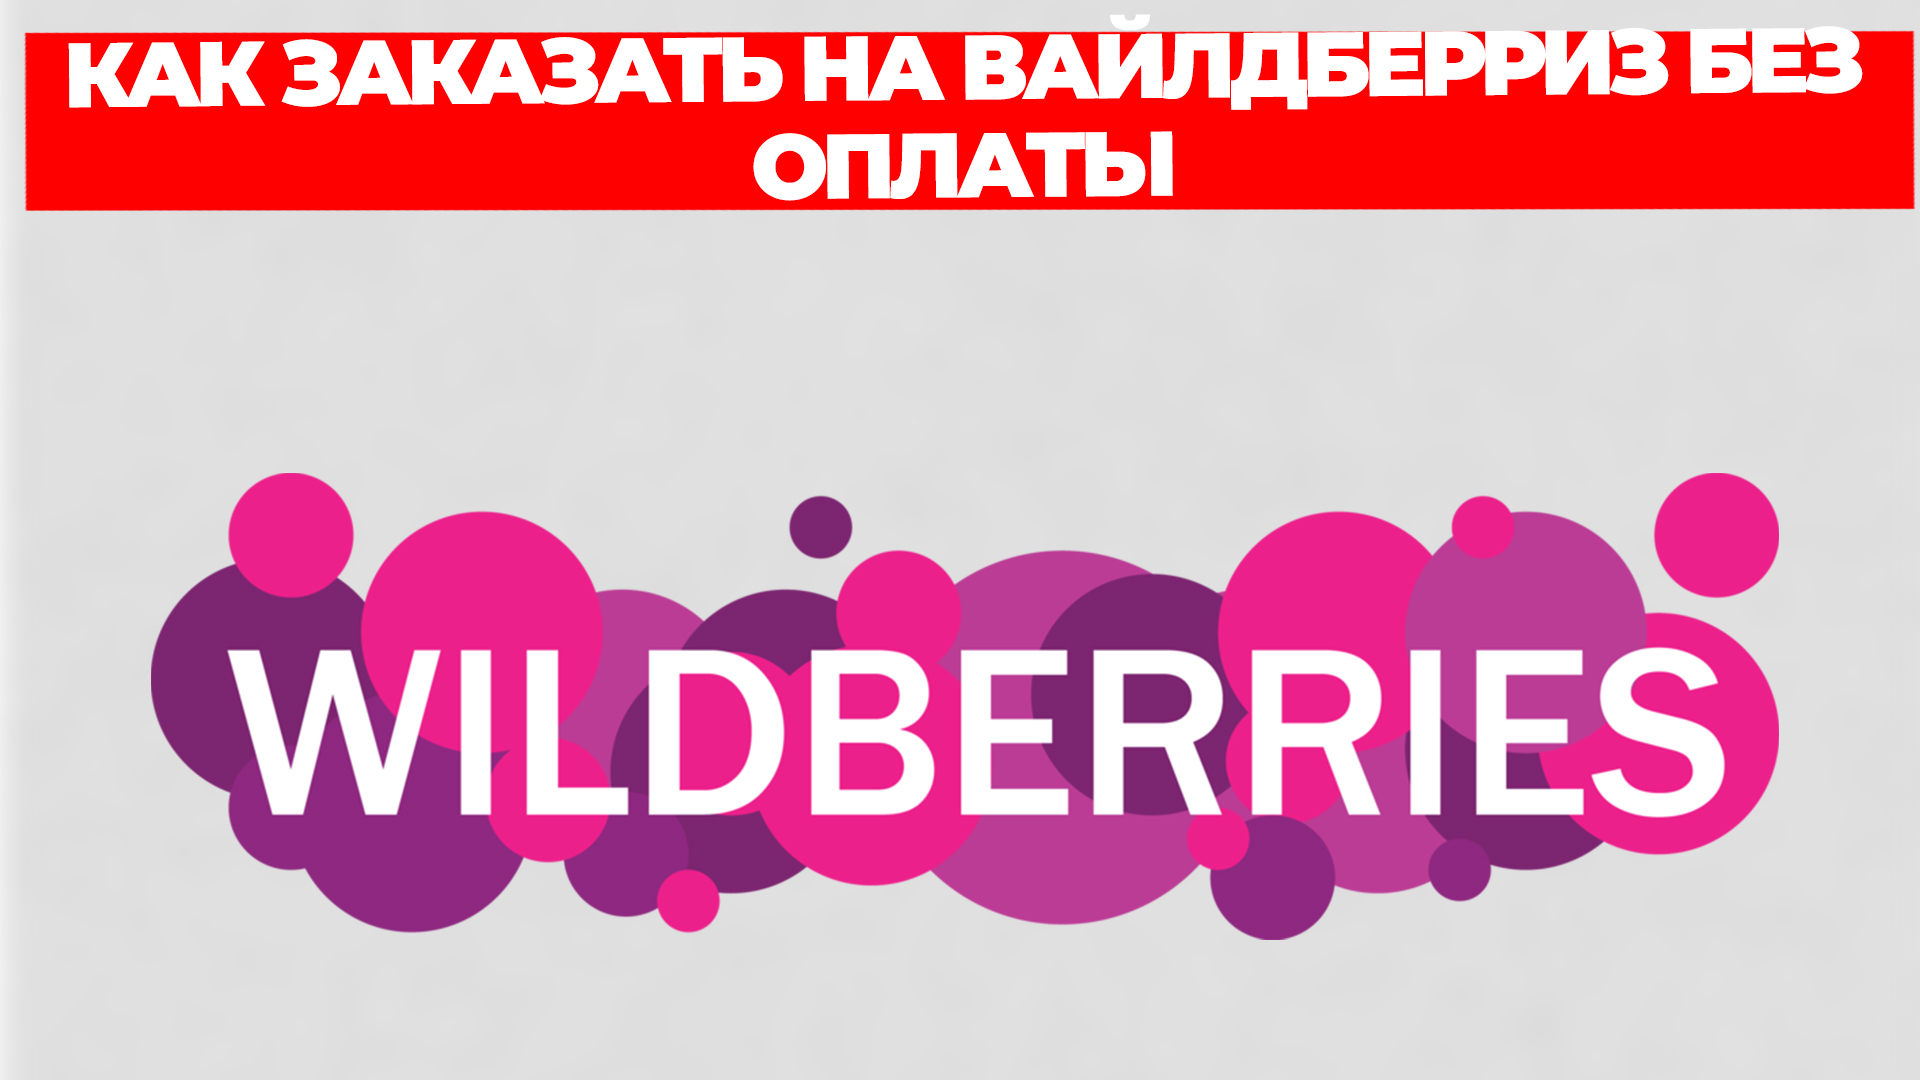 Https ssp wildberries ru. Вайлдберриз. Wildberries лого. Wildberries интернет магазин. Wildberries иконка.